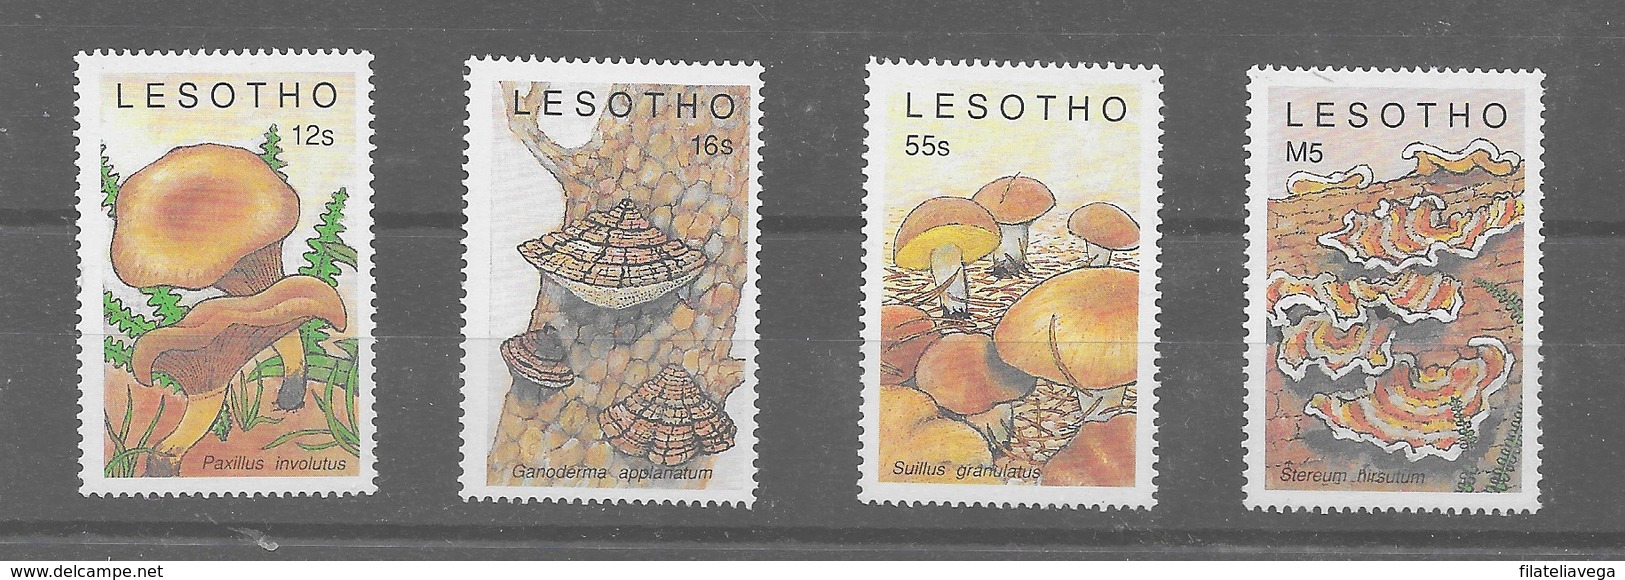 Serie De Lesotho Nº Yvert 852/55 **  SETAS (MUSHROOMS) - Hongos